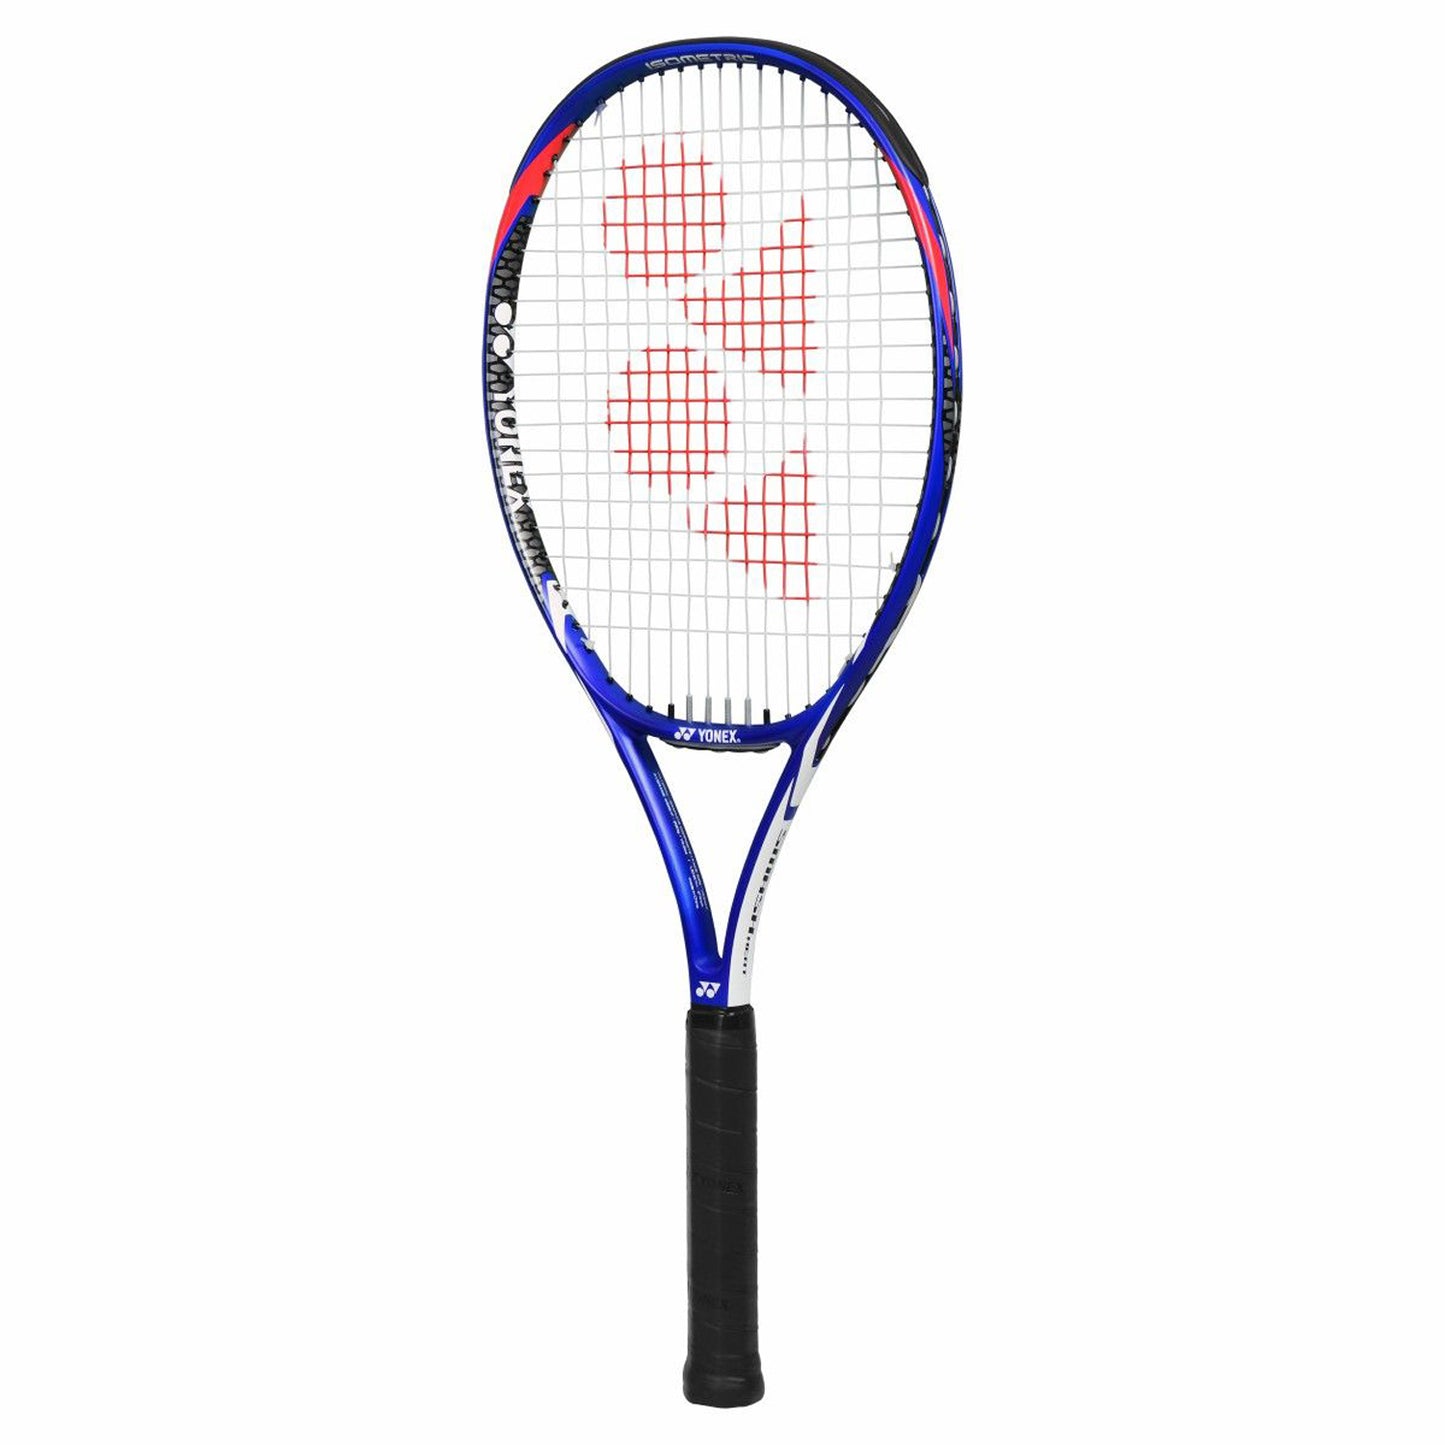 Yonex Smash Heat Strung Tennis Racquet, Blue - Best Price online Prokicksports.com